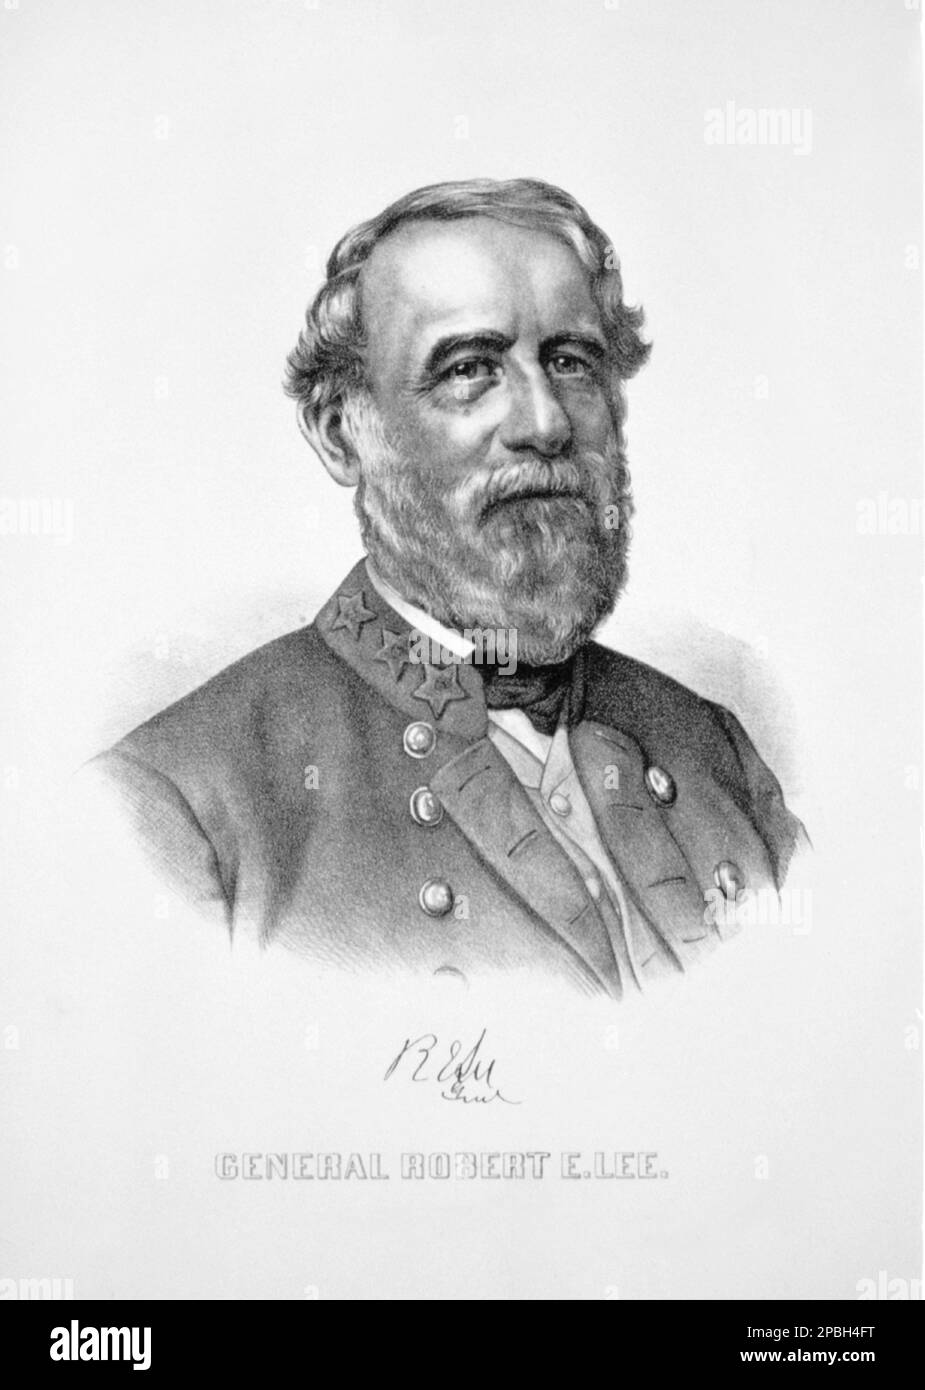 The  General ROBERT E. LEE  ( 1807 - 1870 ) of Confederate Army .  Lee was a career United States Army officer, an engineer, and among the most celebrated generals in American history.   SECESSION WAR  CIVIL - GUERRA CIVILE DI SECESSIONE AMERICANA  -  uomo anziano vecchio - older man  - barba bianca - white beard  -  tie bow - papillon - cravatta -  - USA  - SUDISTA CONFEDERATO - CONFEDERATE ----  Archivio GBB Stock Photo